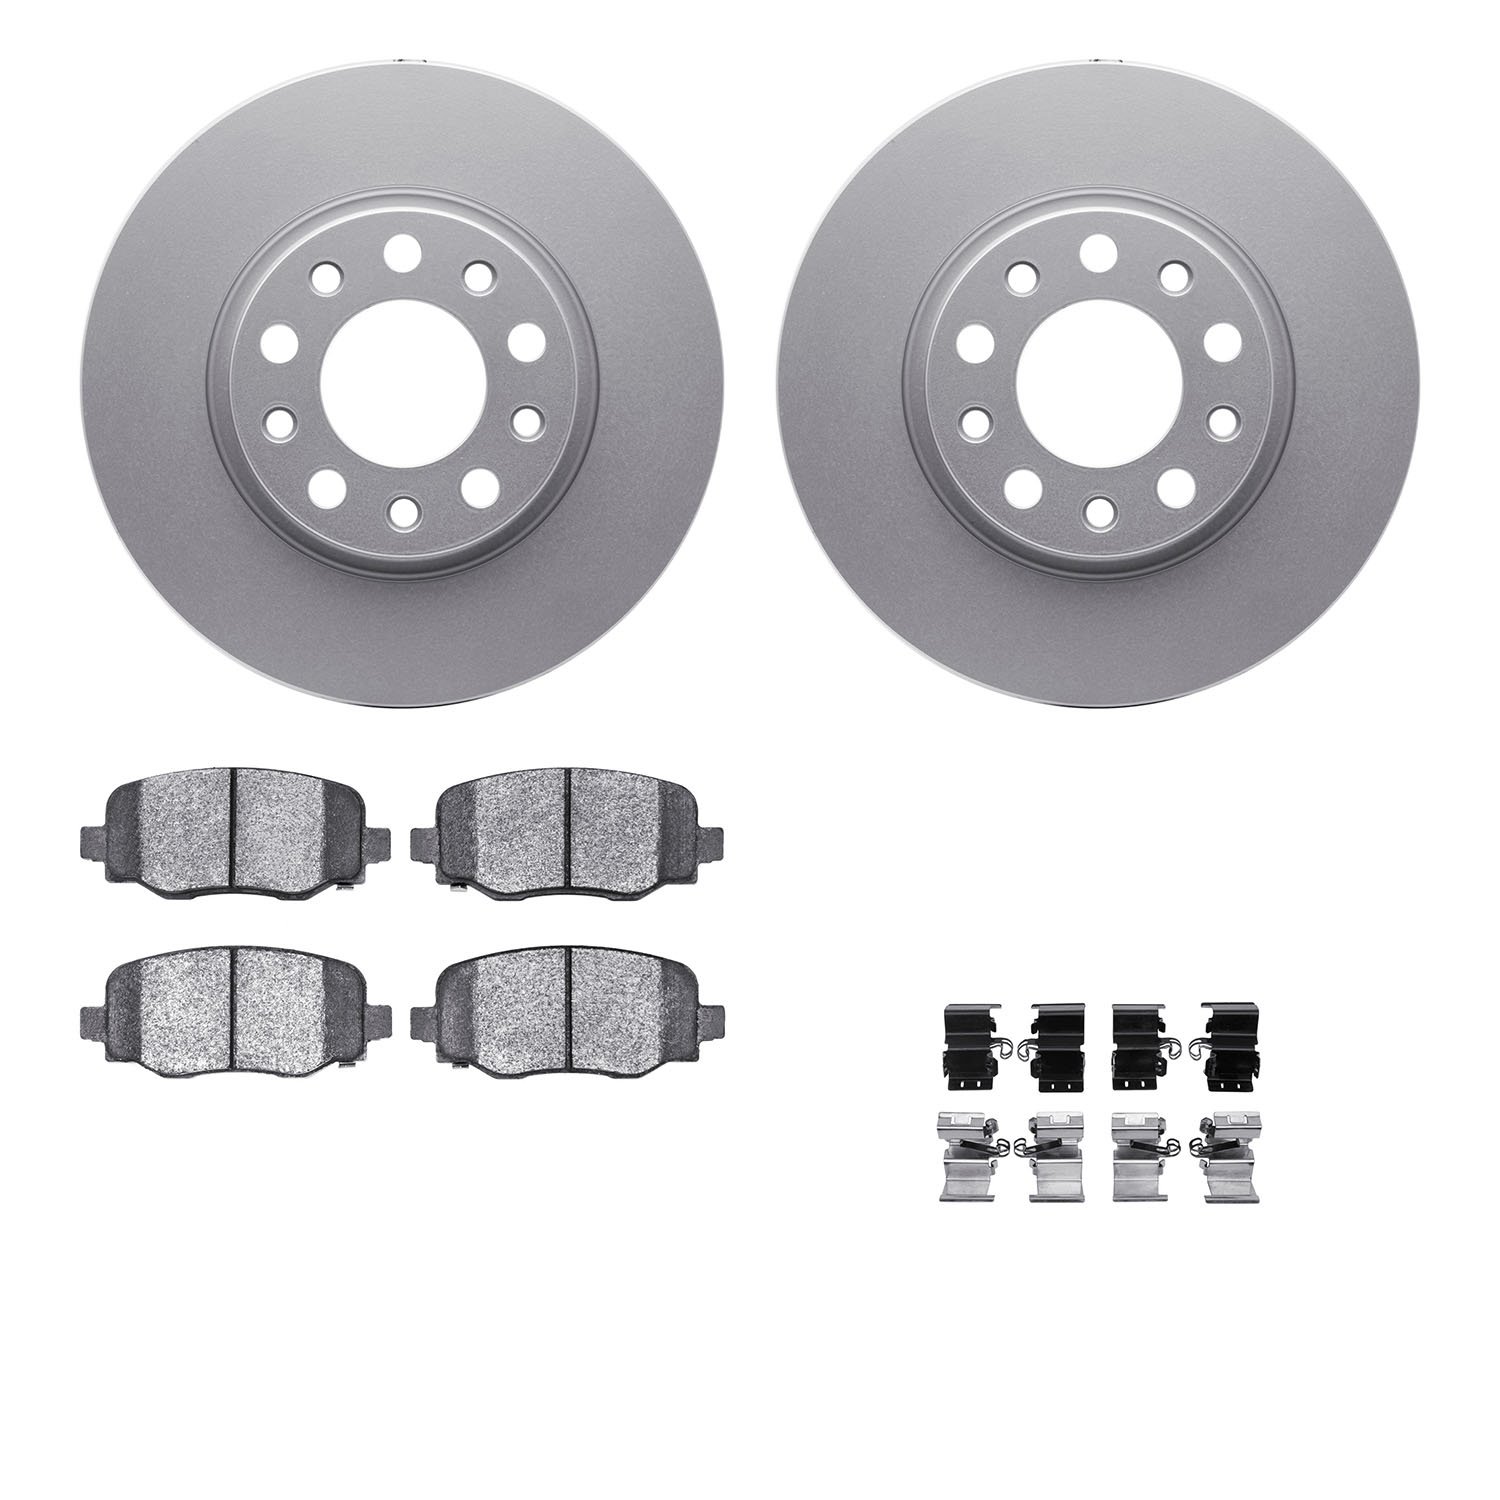 4412-42014 Geospec Brake Rotors with Ultimate-Duty Brake Pads & Hardware, Fits Select Mopar, Position: Rear